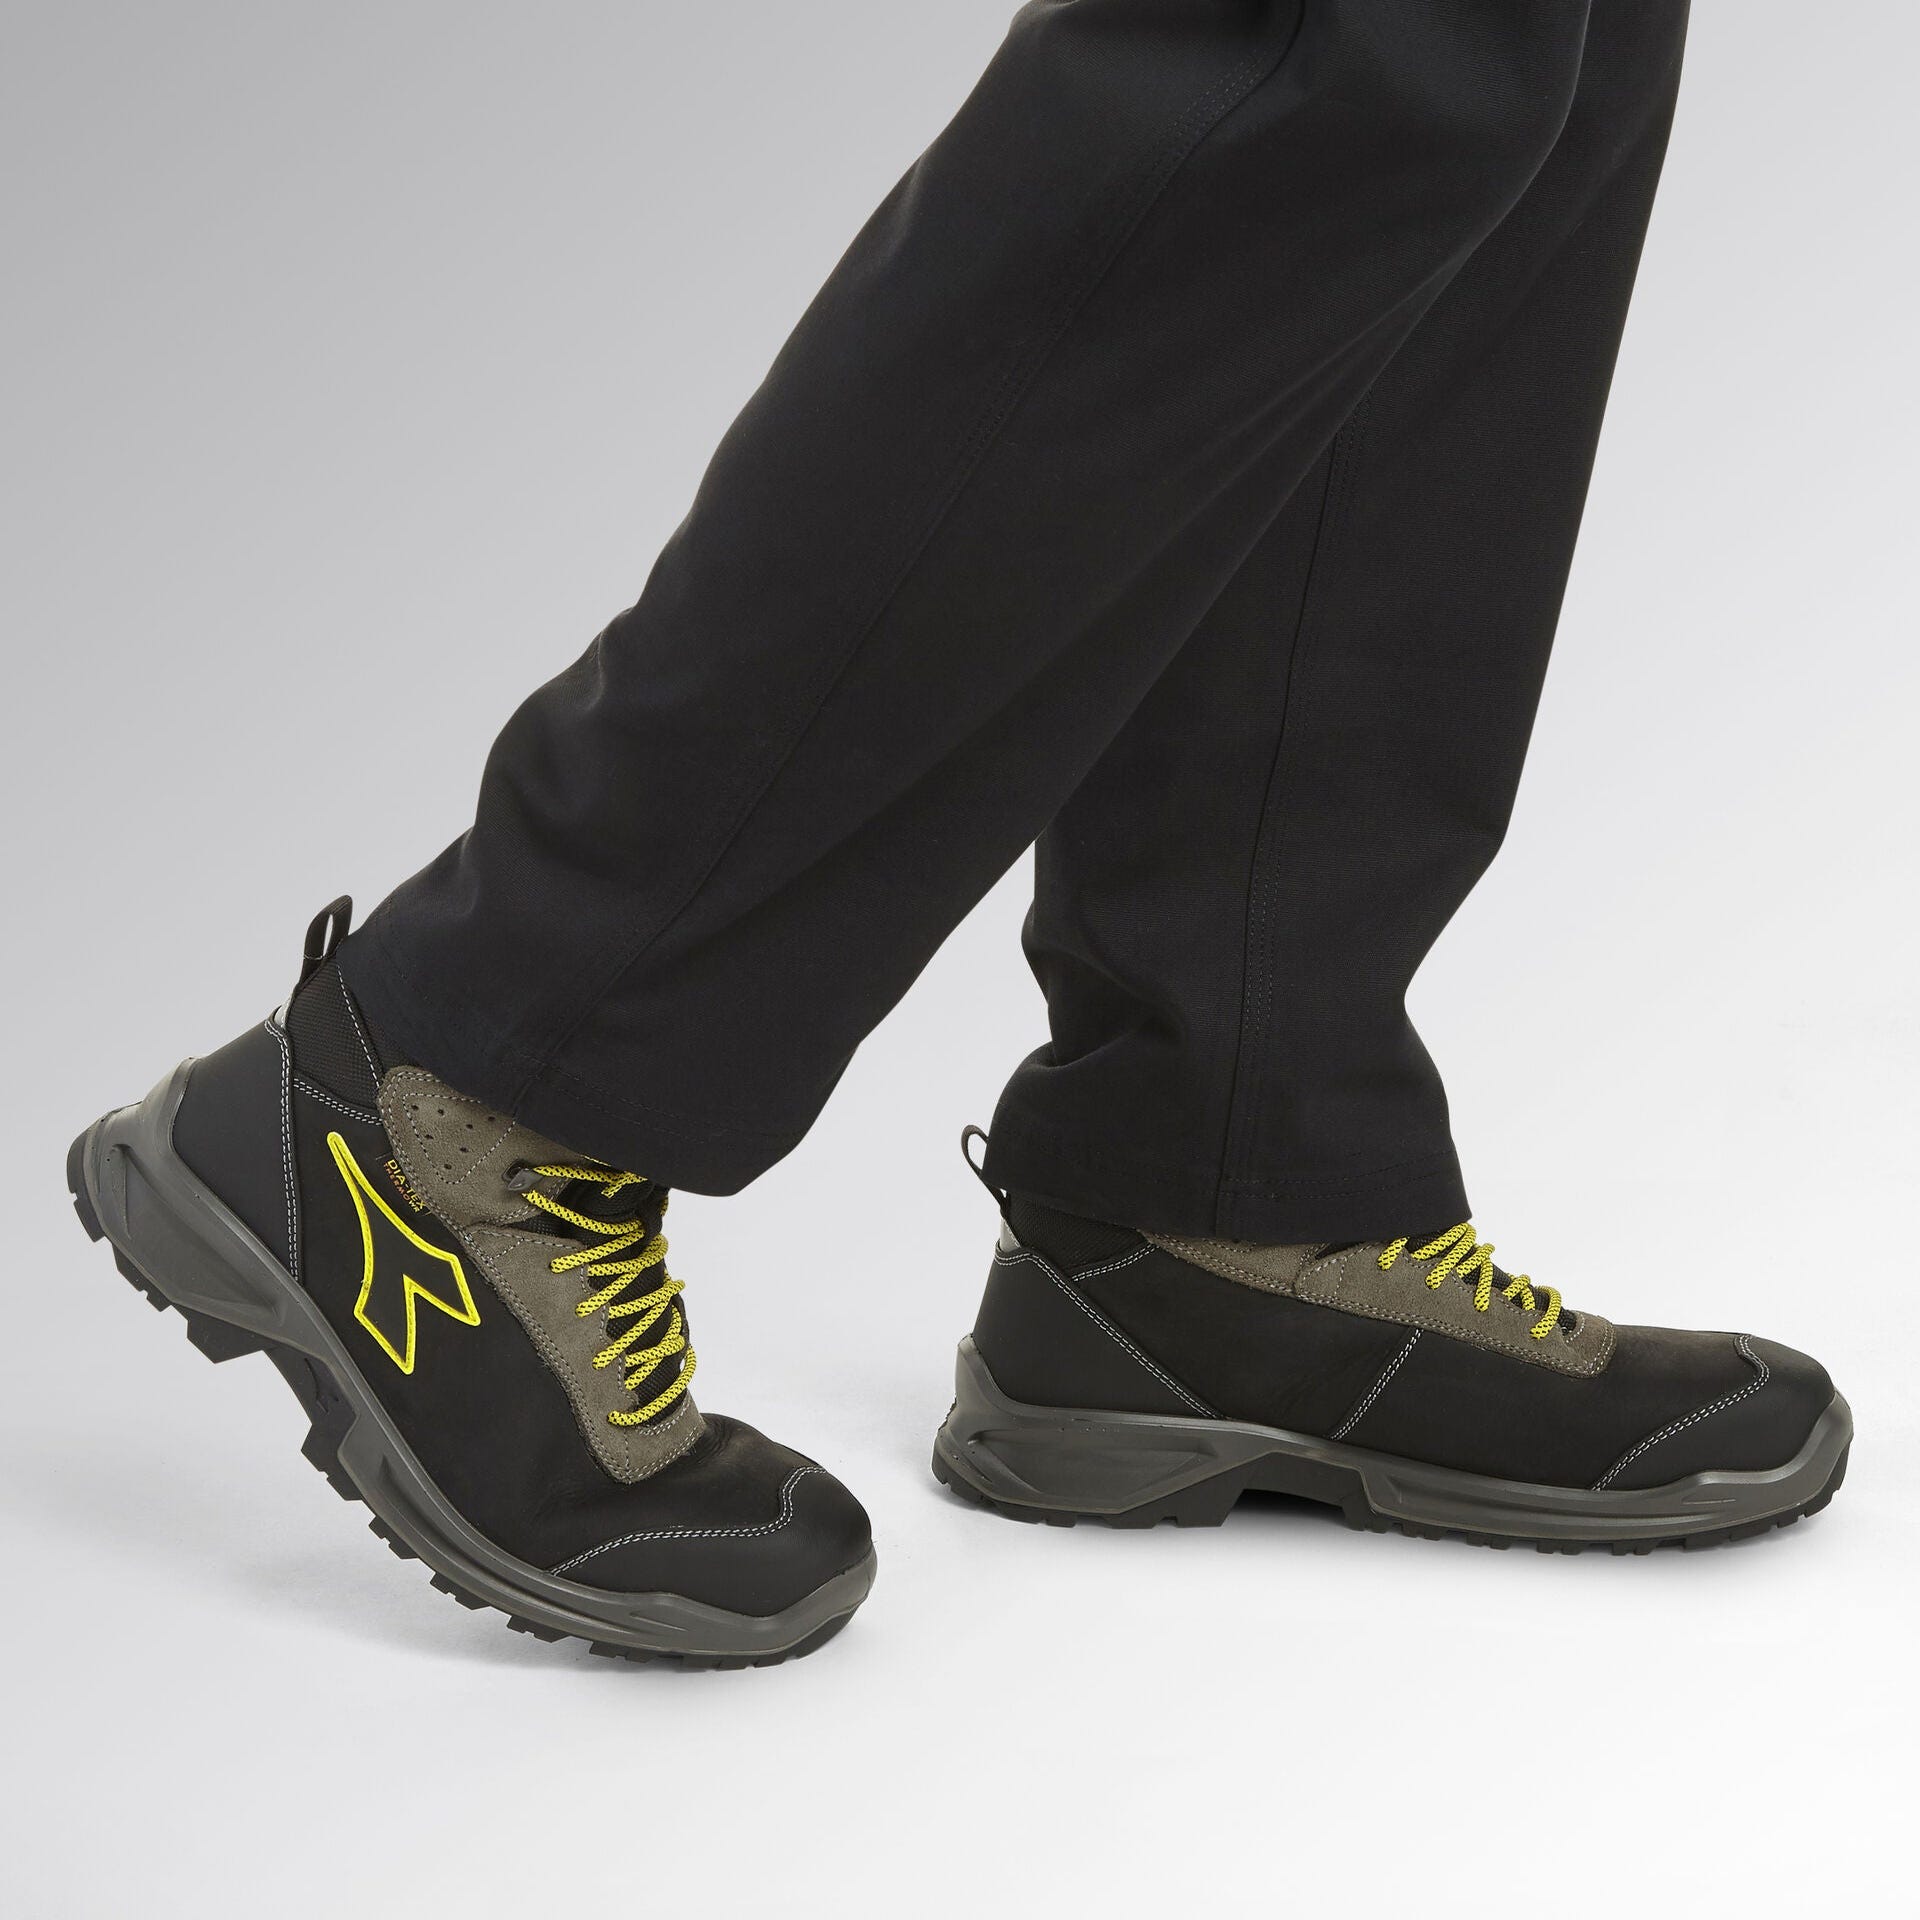 Chaussures S3 imperméables thermo-isolantes Diadora Noir / Jaune 47 6